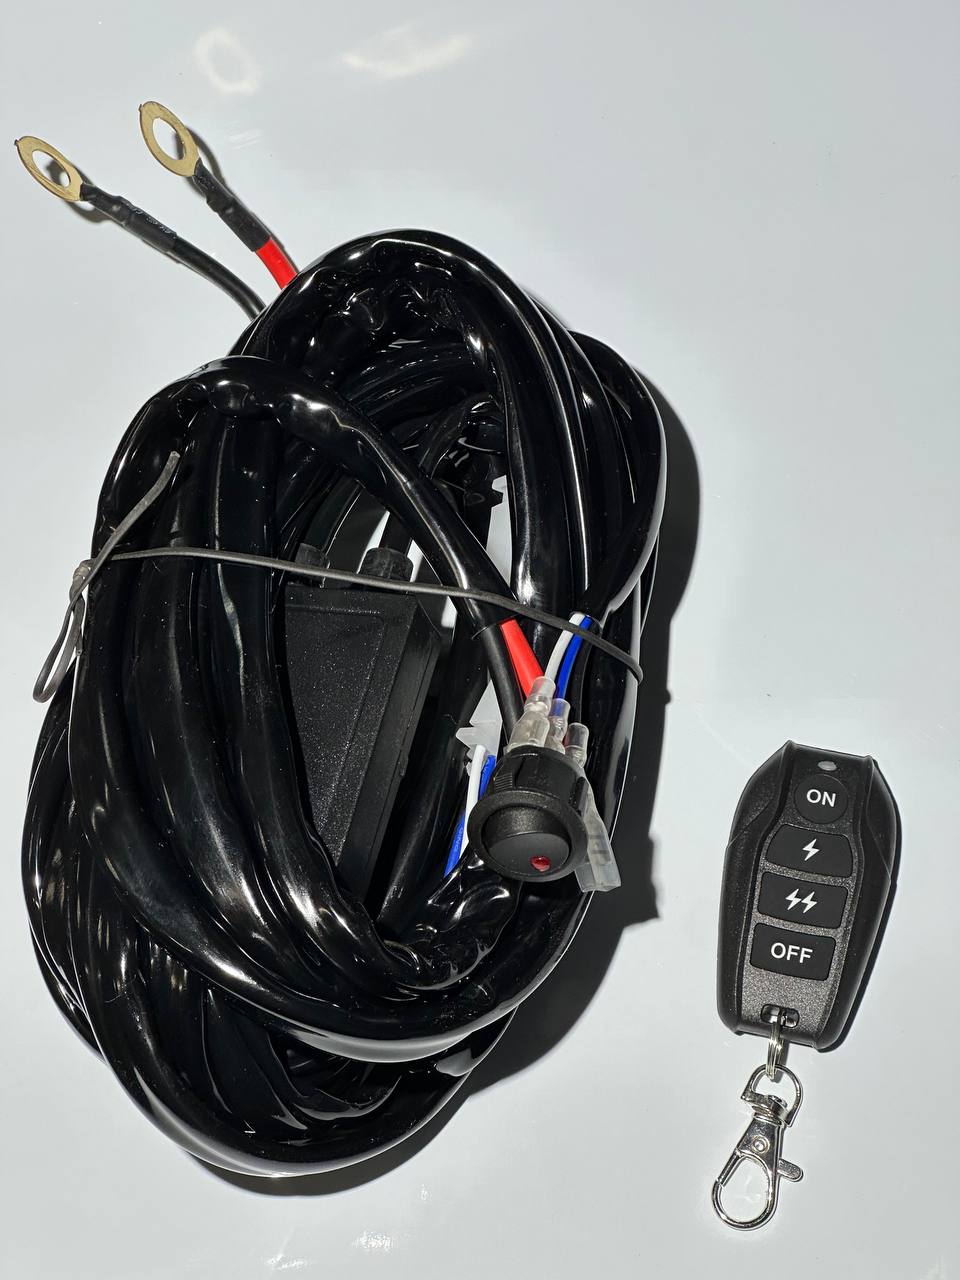 Wiring Harness + Wireless Remote